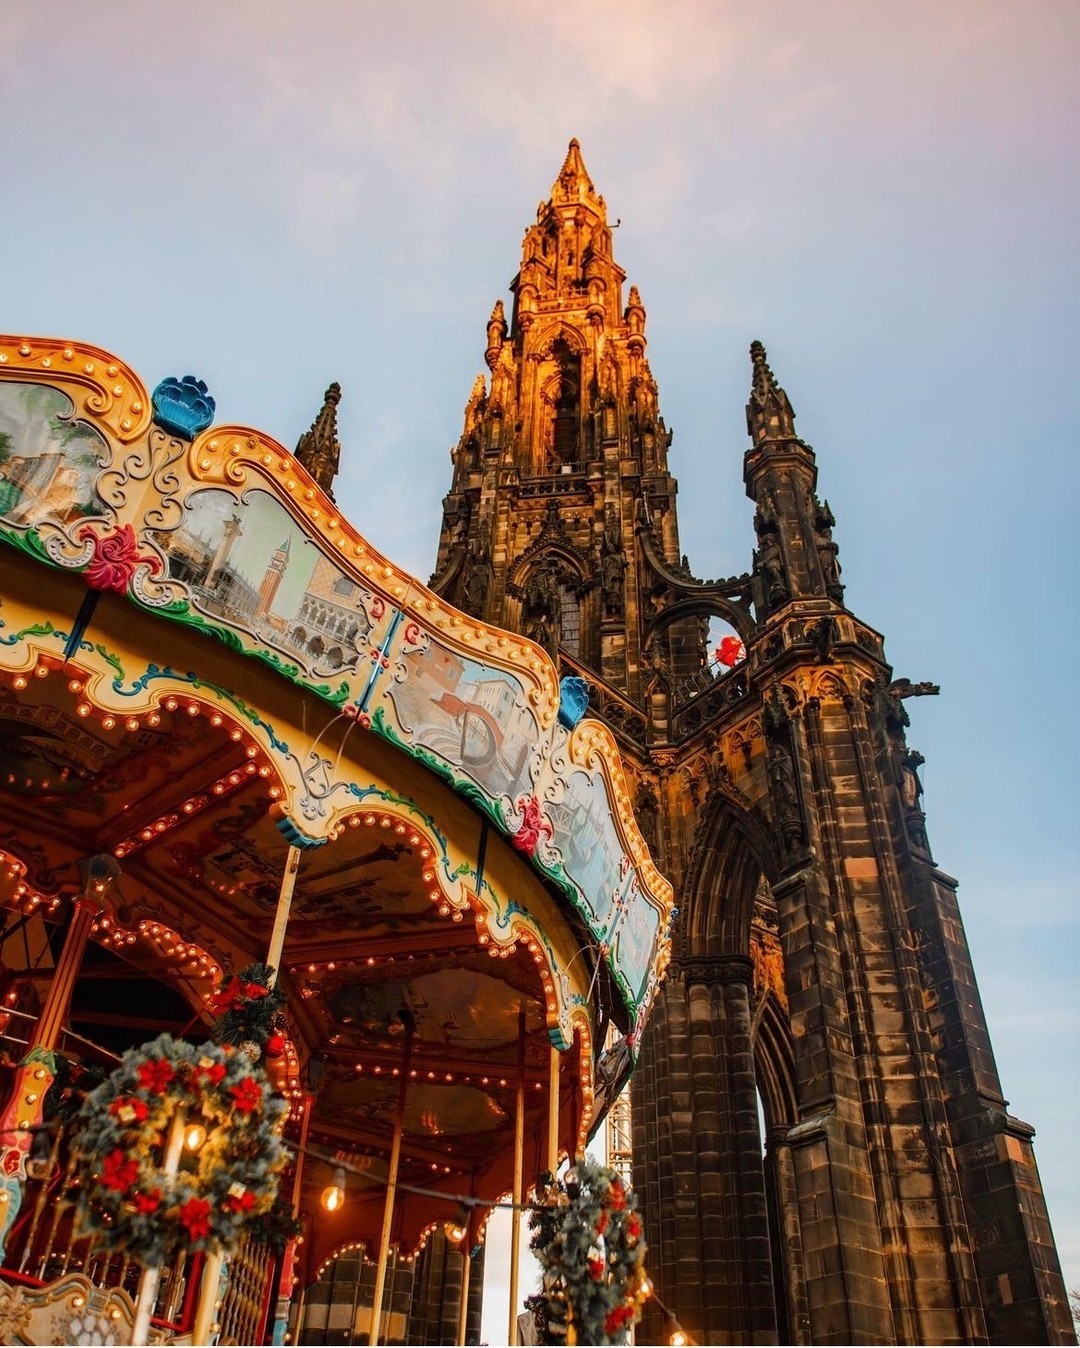 Edinburgh Christmas Market - Best Christmas Markets in Europe